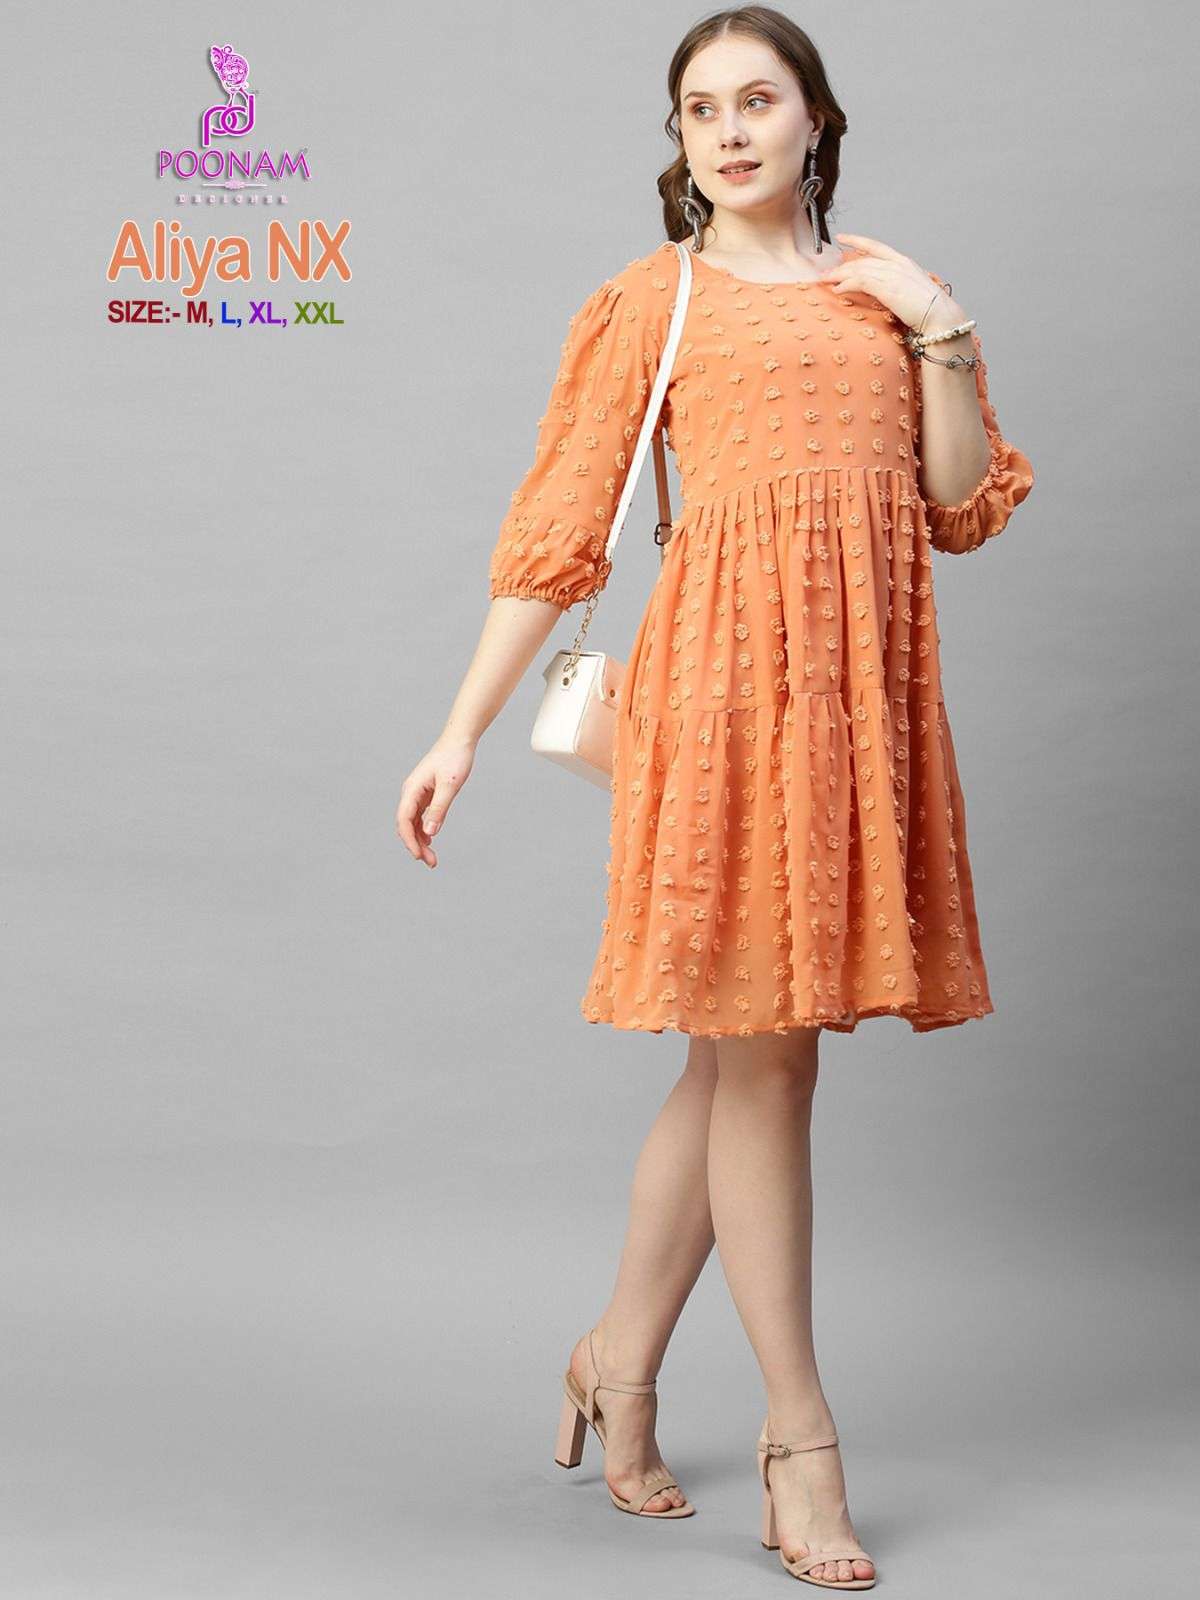 poonam designer aliya nx 1001-1006 series fancy short gown catalogue wholesaler surat 